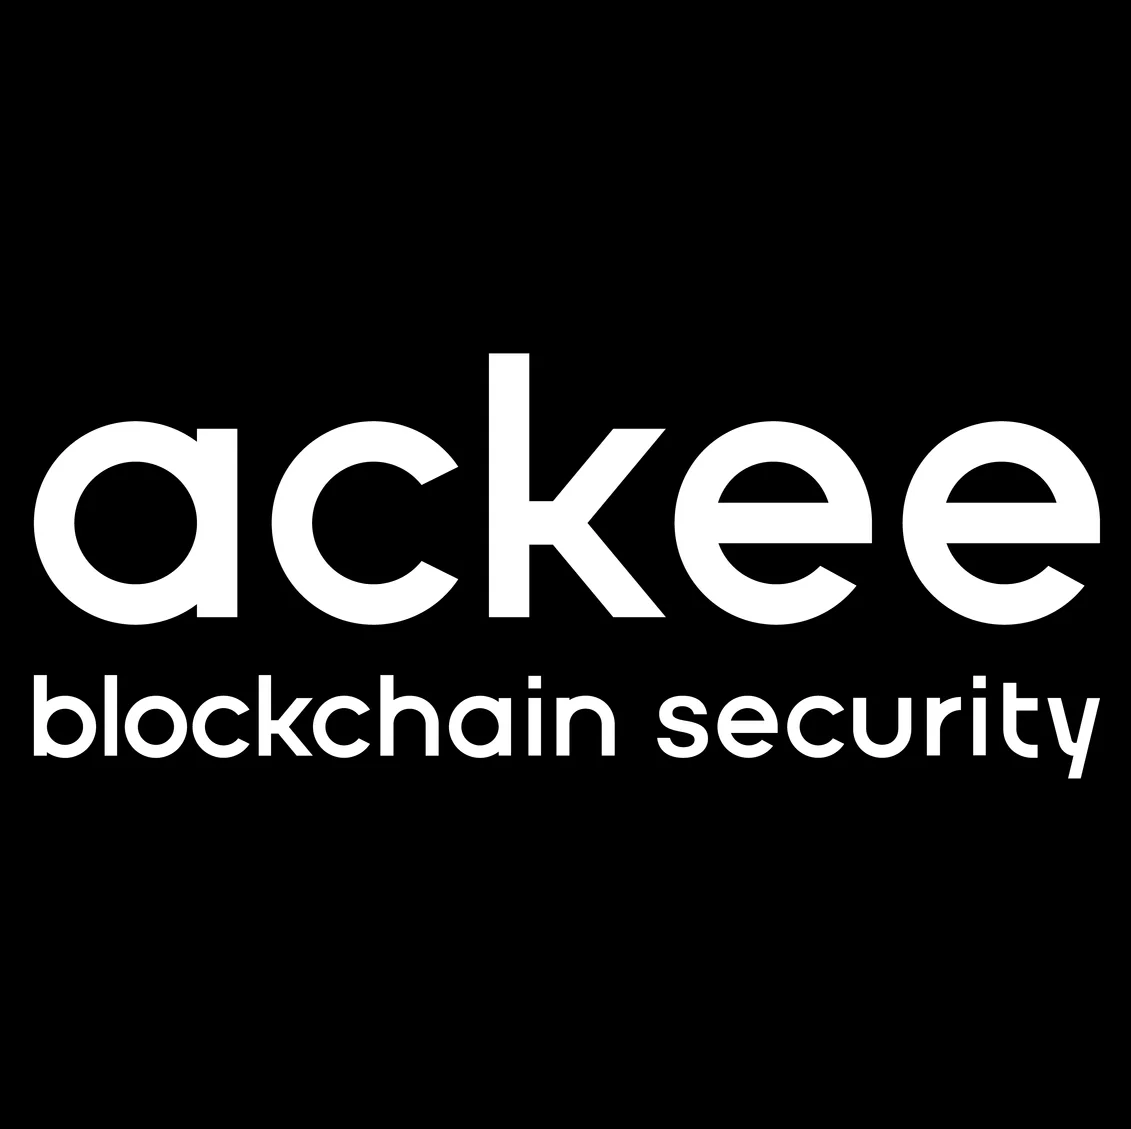 Ackee Blockchain Security